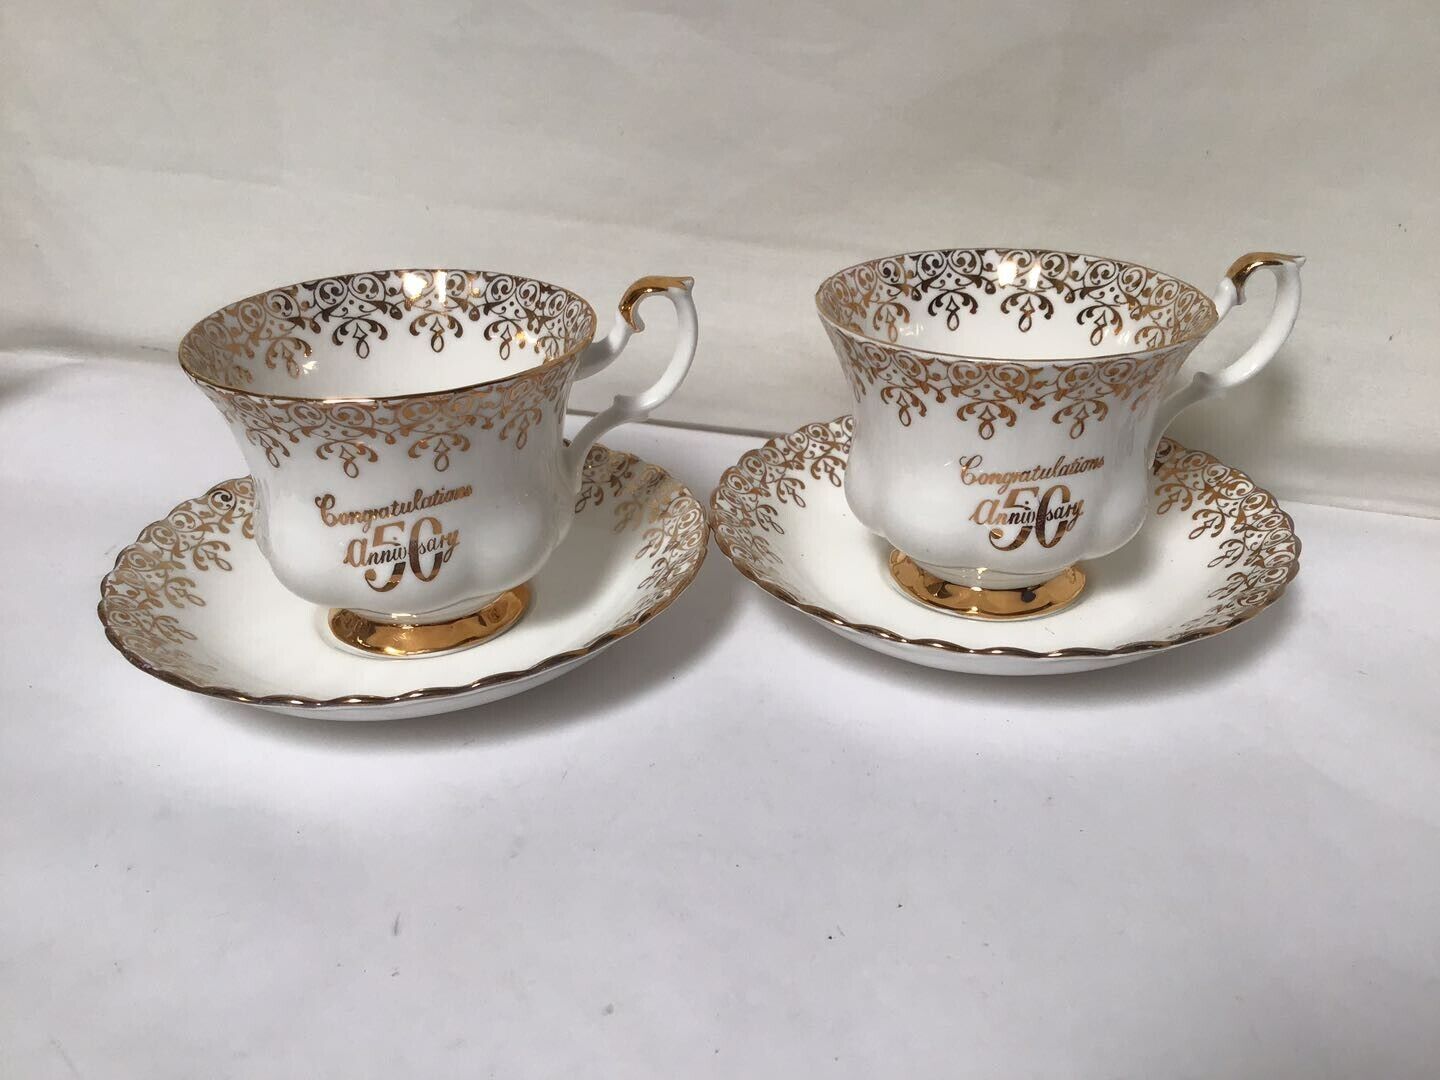 SS5 Vintage Royal Albert English Bone China Teacup and Saucer For Gift Set of 2